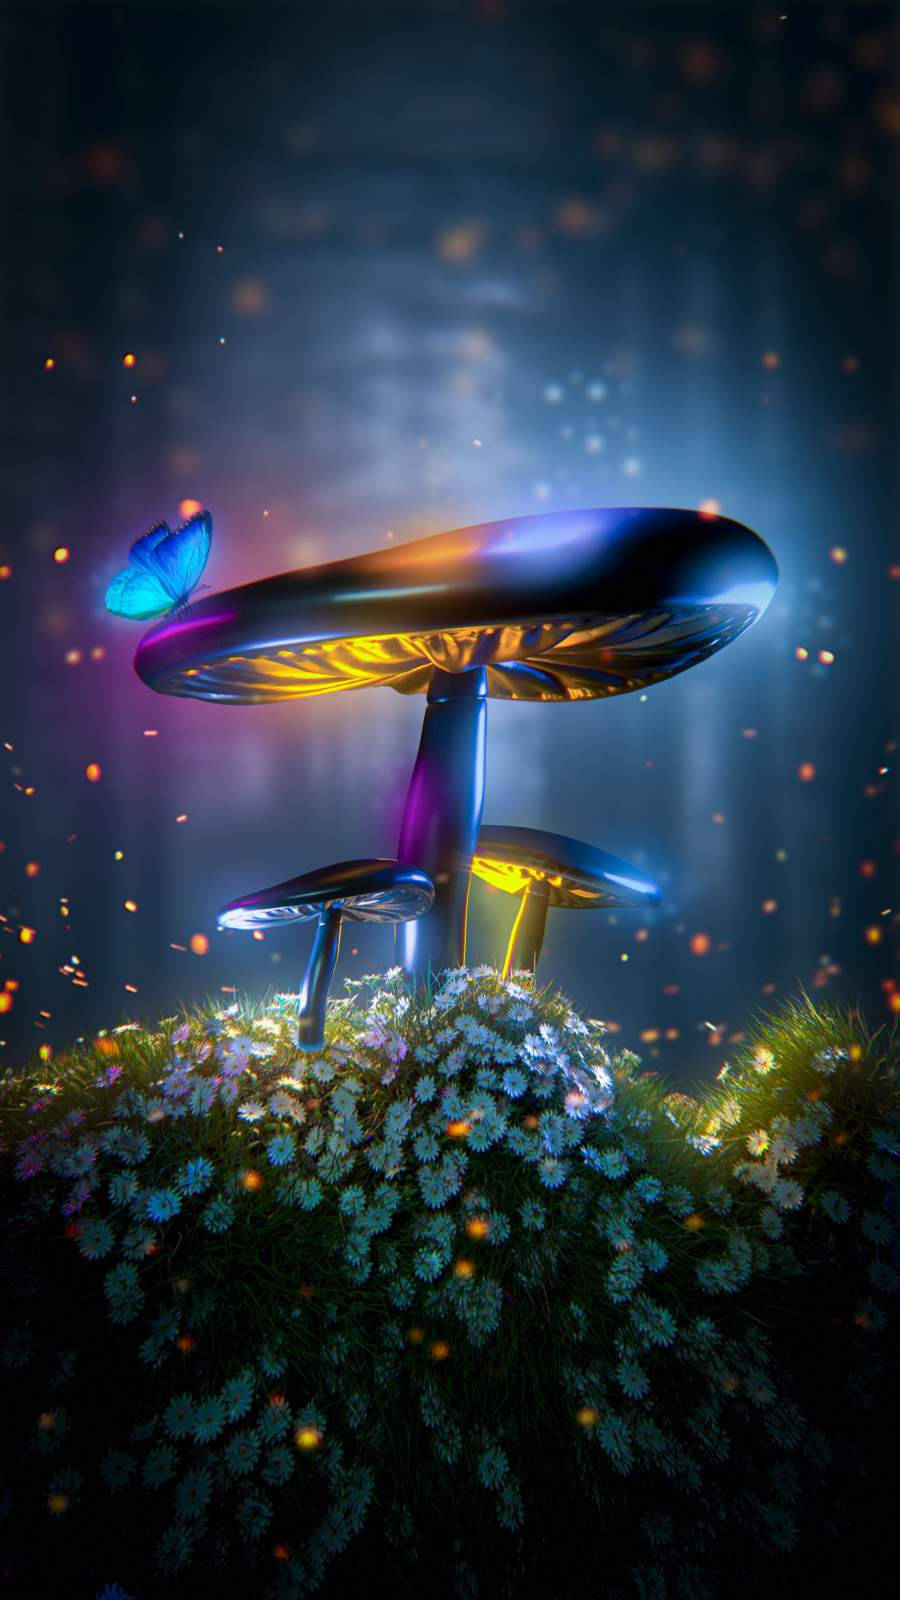 Magical Psychedelic Mushroom Wallpaper